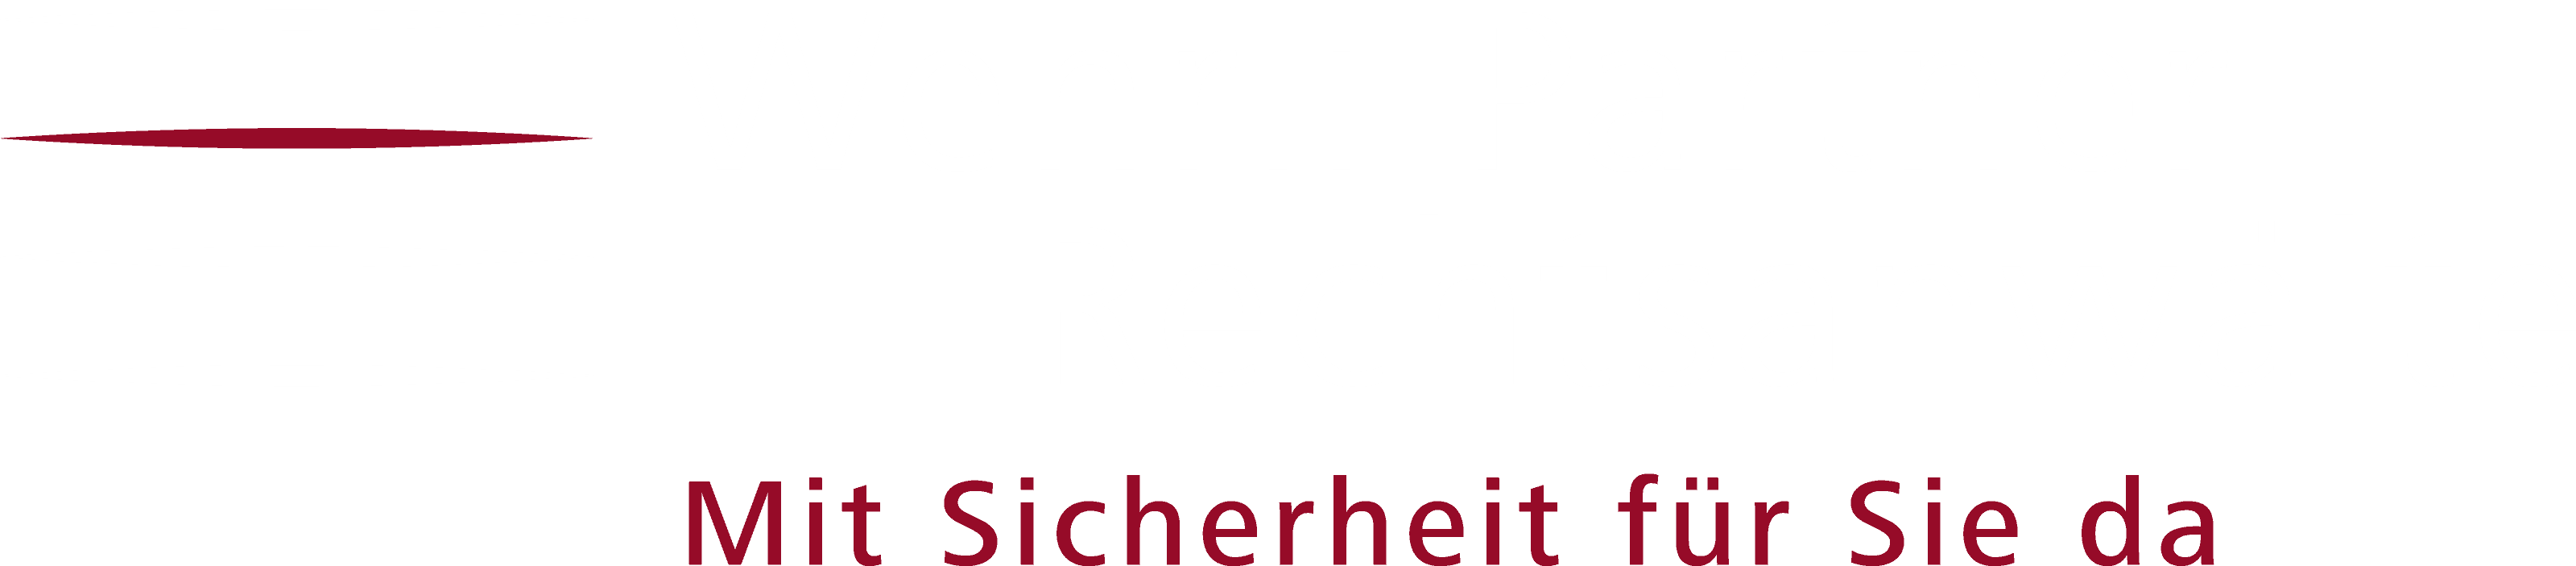 Logo Wehrli Partner transparent weiss (Panetone)